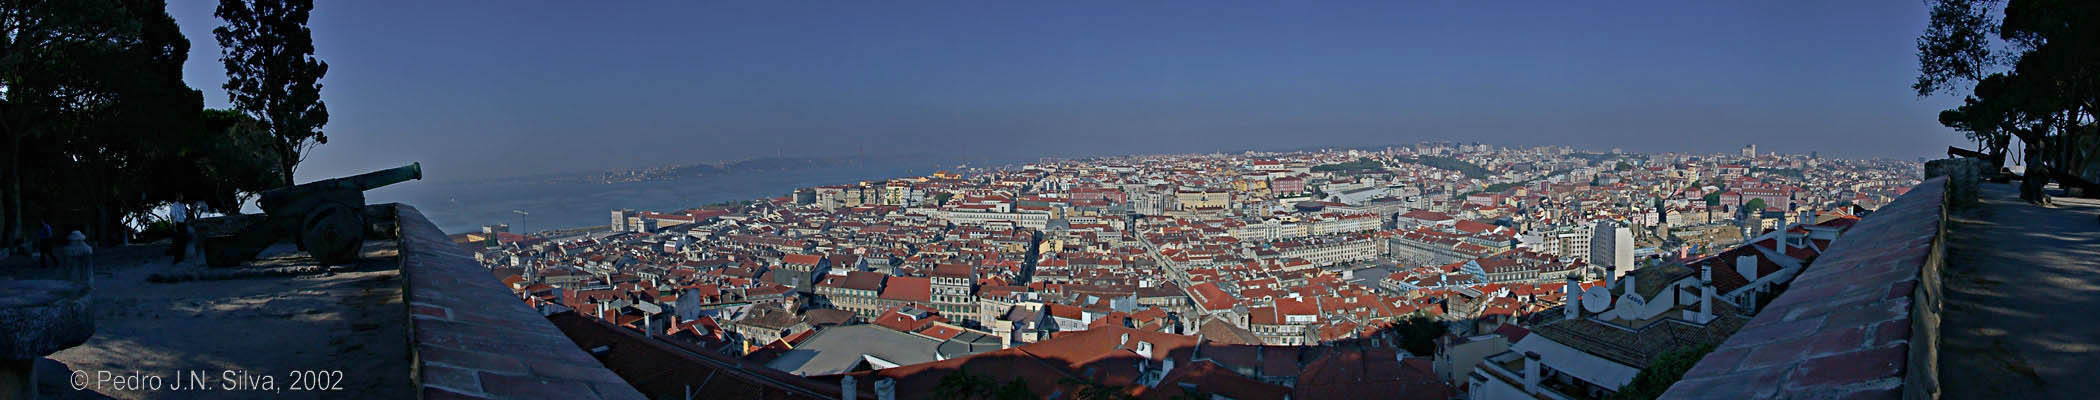 LisboaCasteloSJorge02w